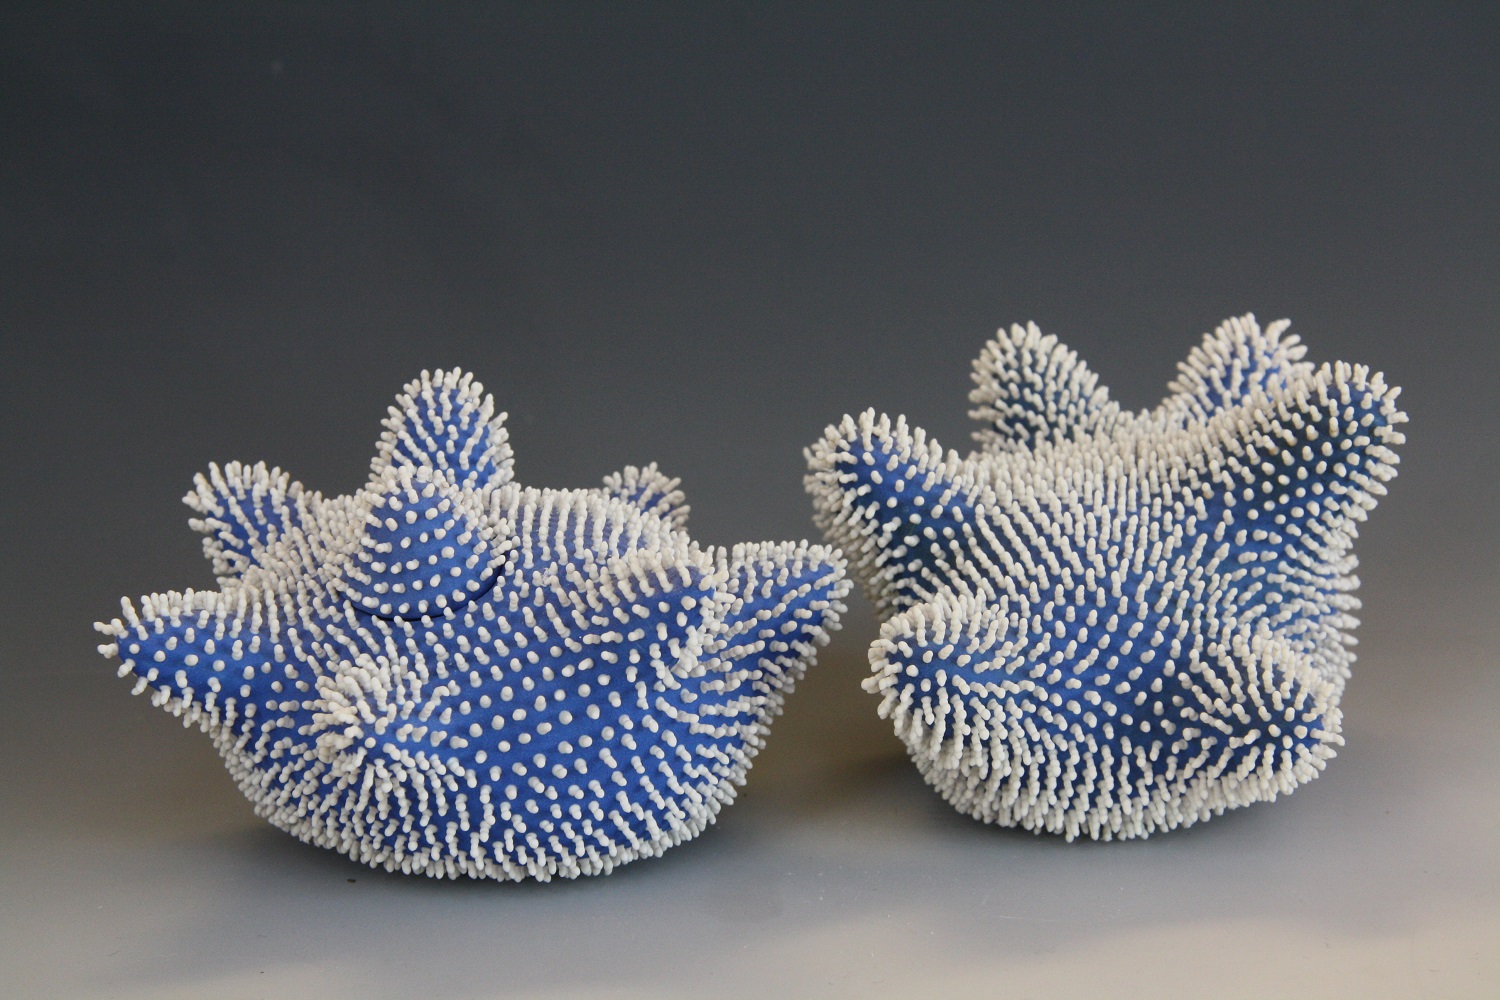 Anne Türn, Hands, porcelain, coloured porcelain slip, 13x13x9cm, 2012